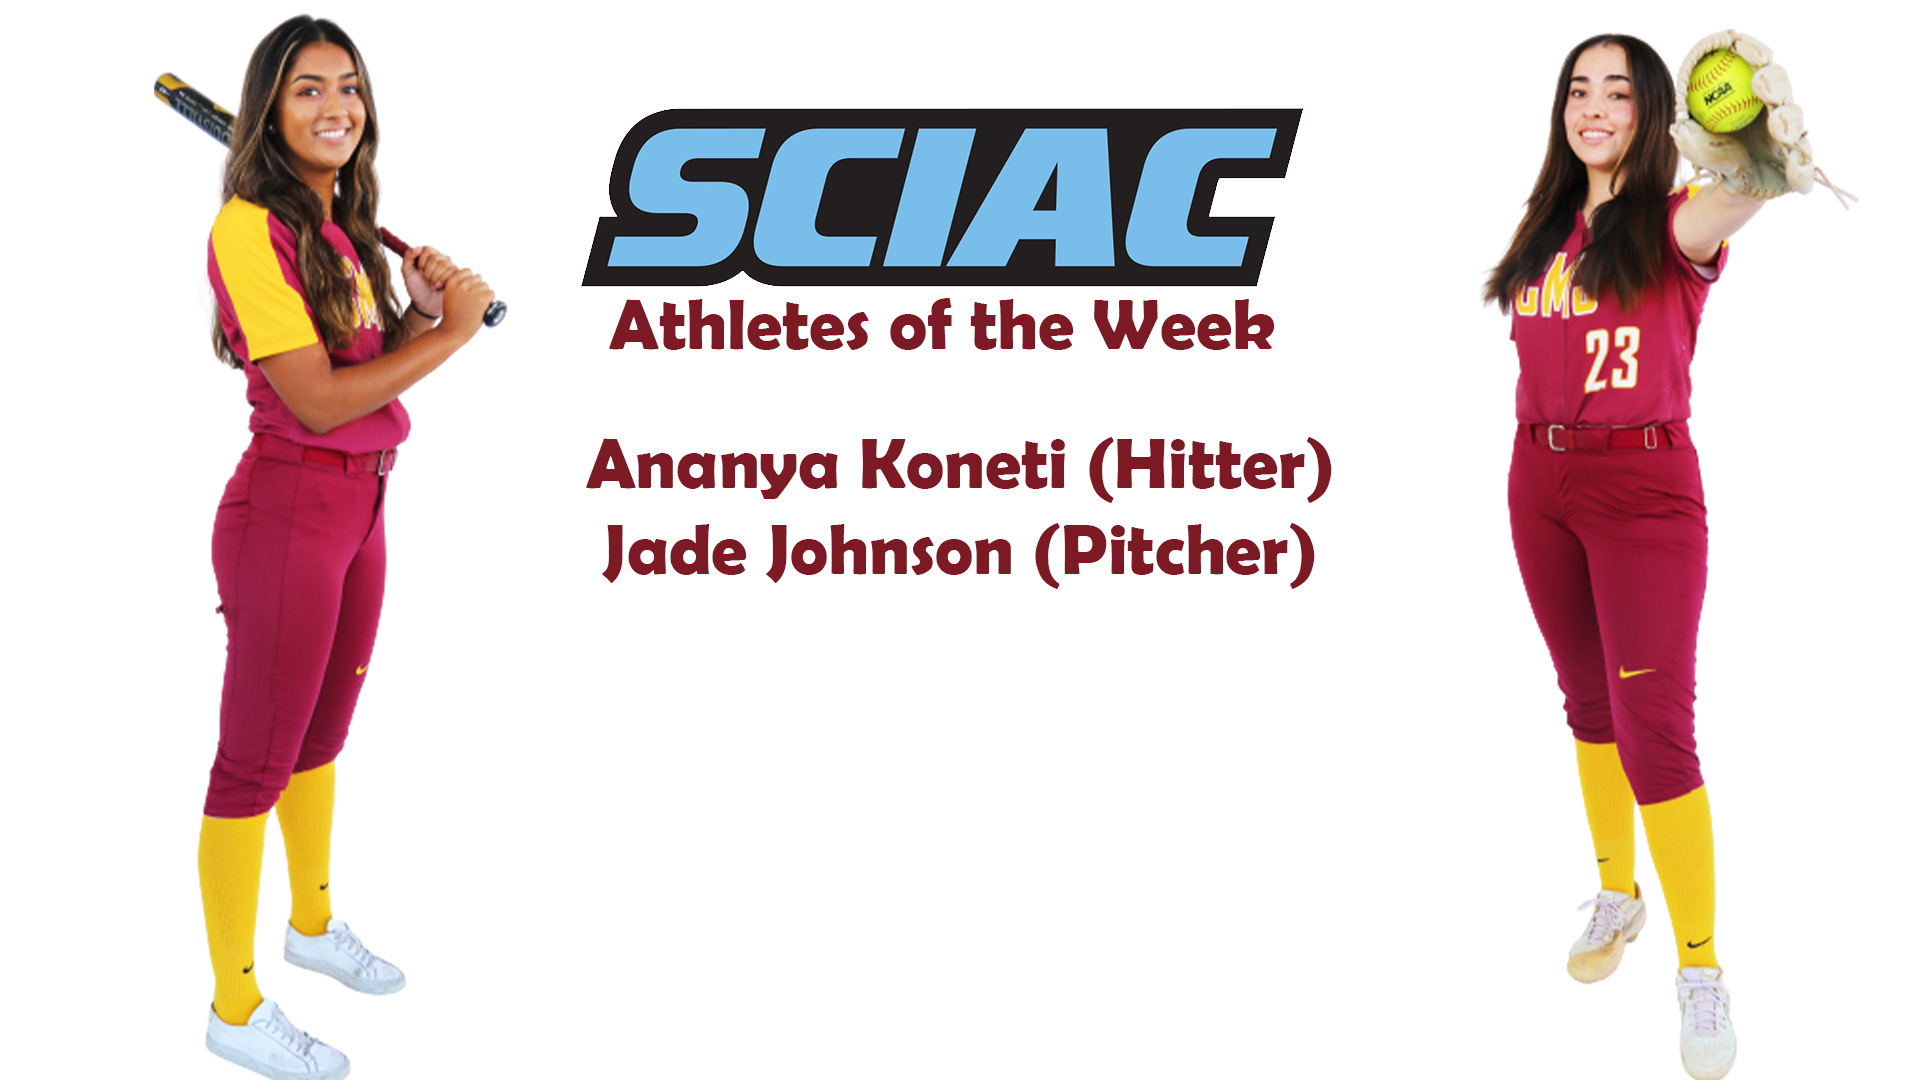 Posed shots of Ananya Koneti and Jade Johnson with the SCIAC logo